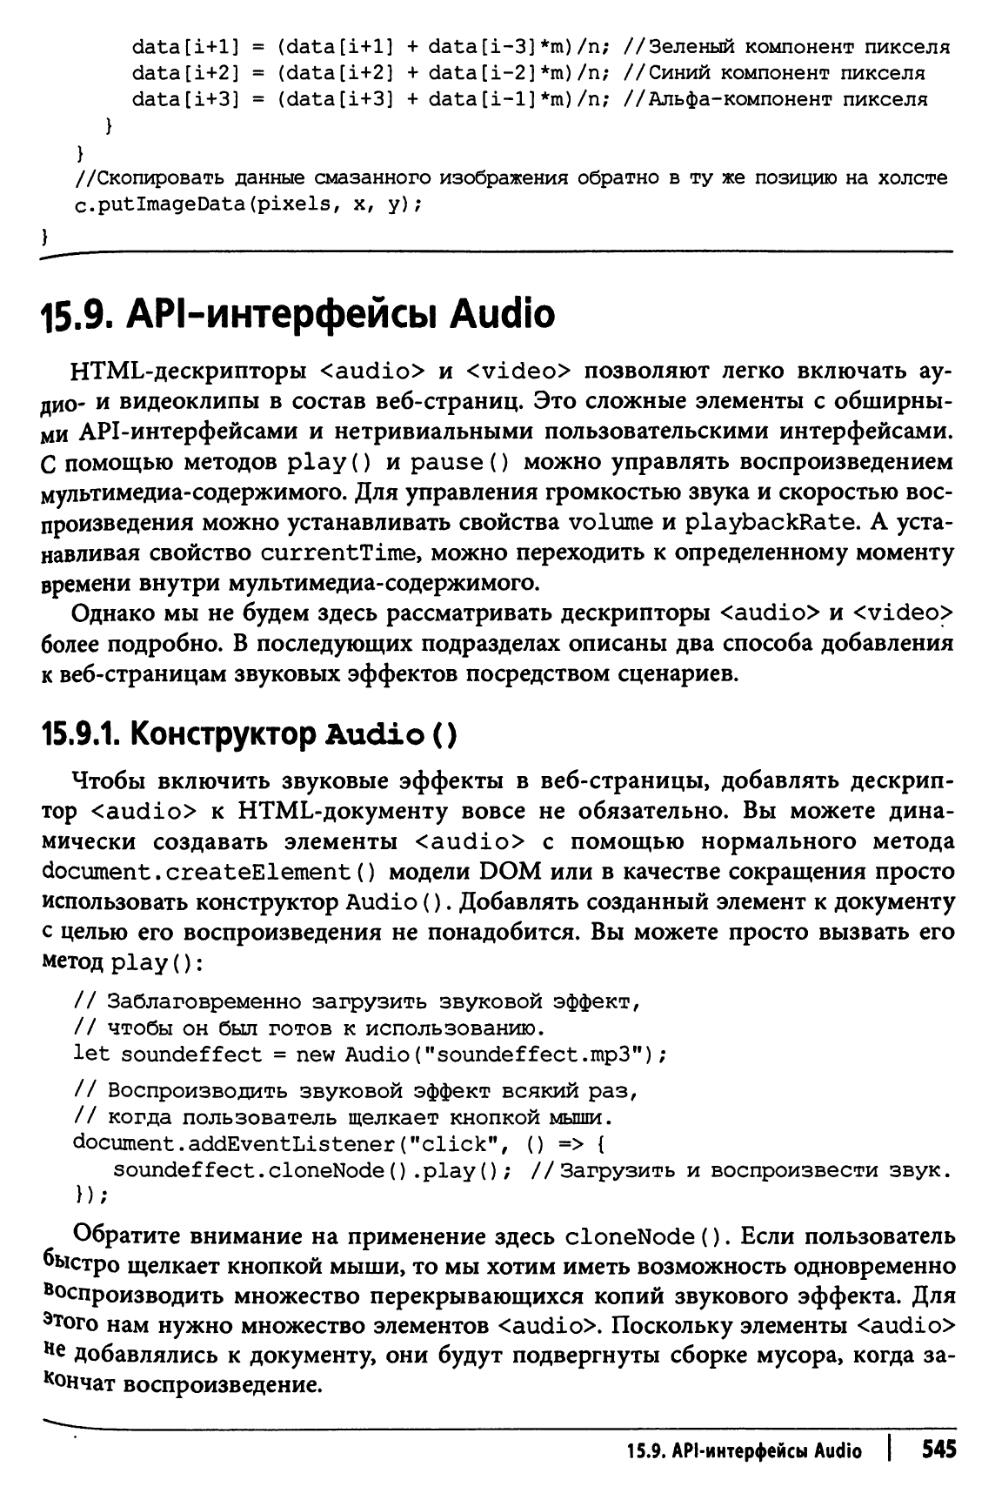 15.9. API-интерфейсы Audio